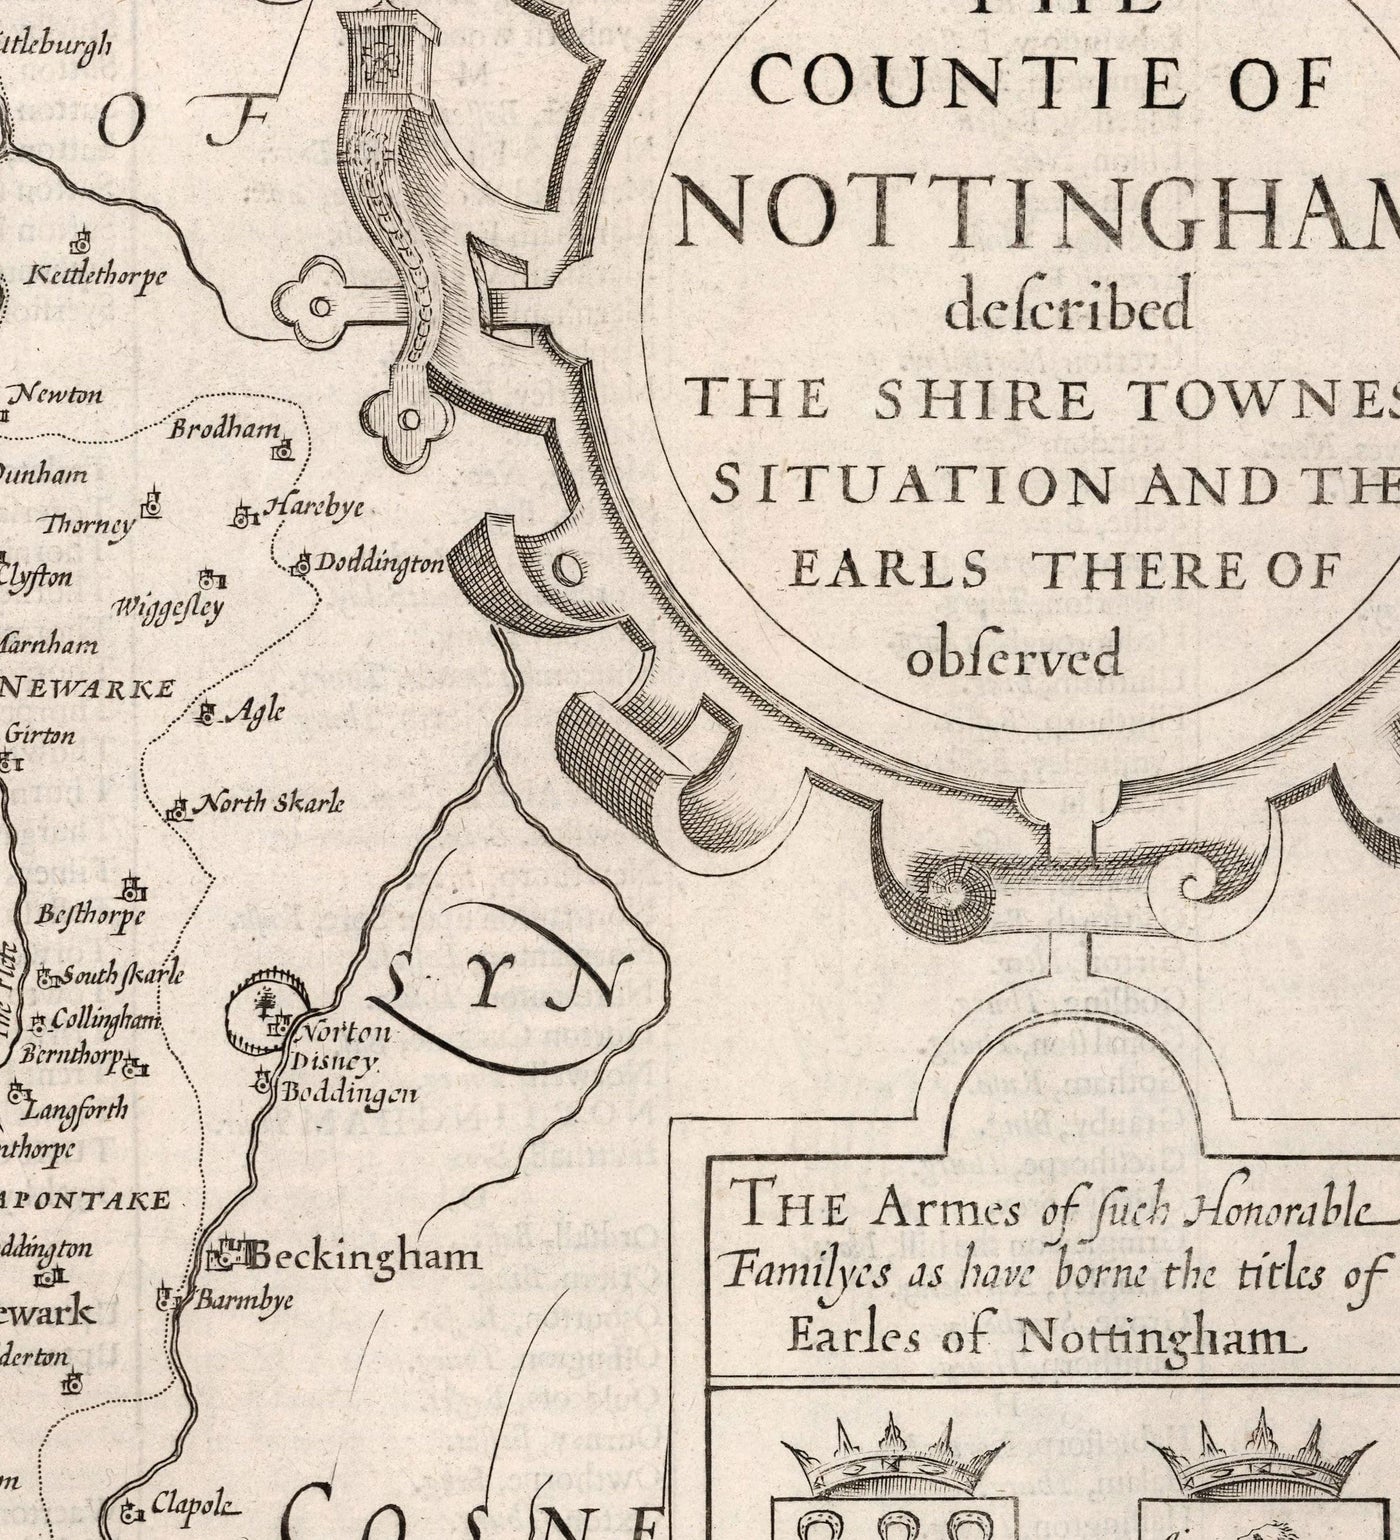 Old Map of Nottinghamshire, 1611 by John Speed - Nottingham, Mansfield, Newark, Worksop, Sherwood Forest